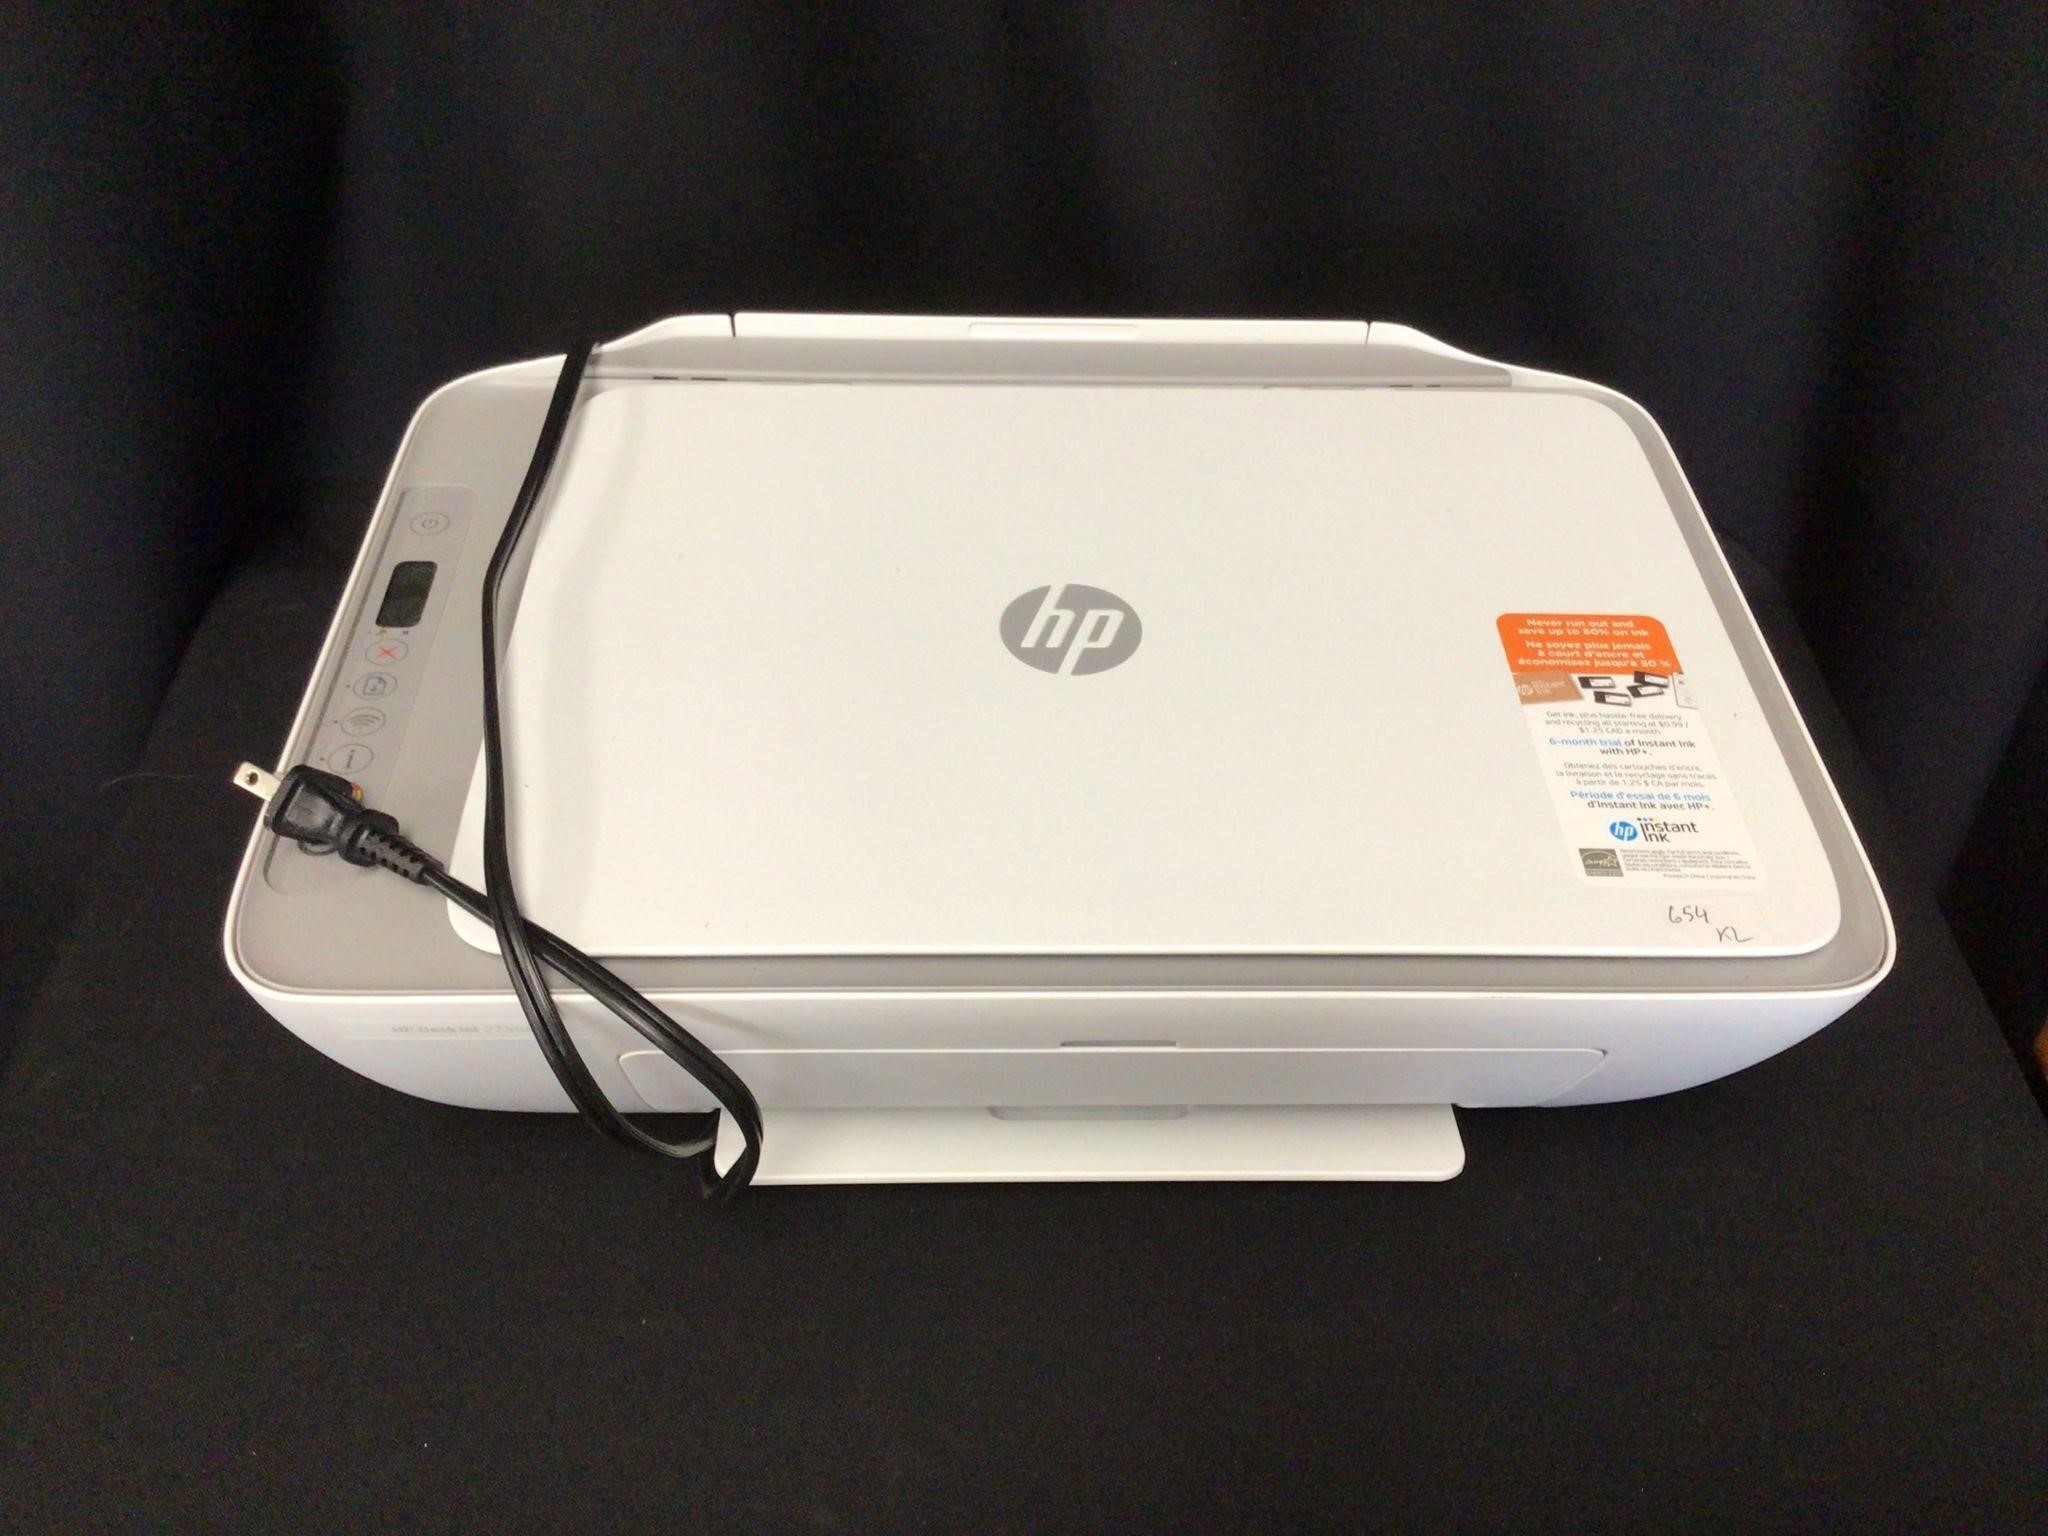 HP Scanner Printer